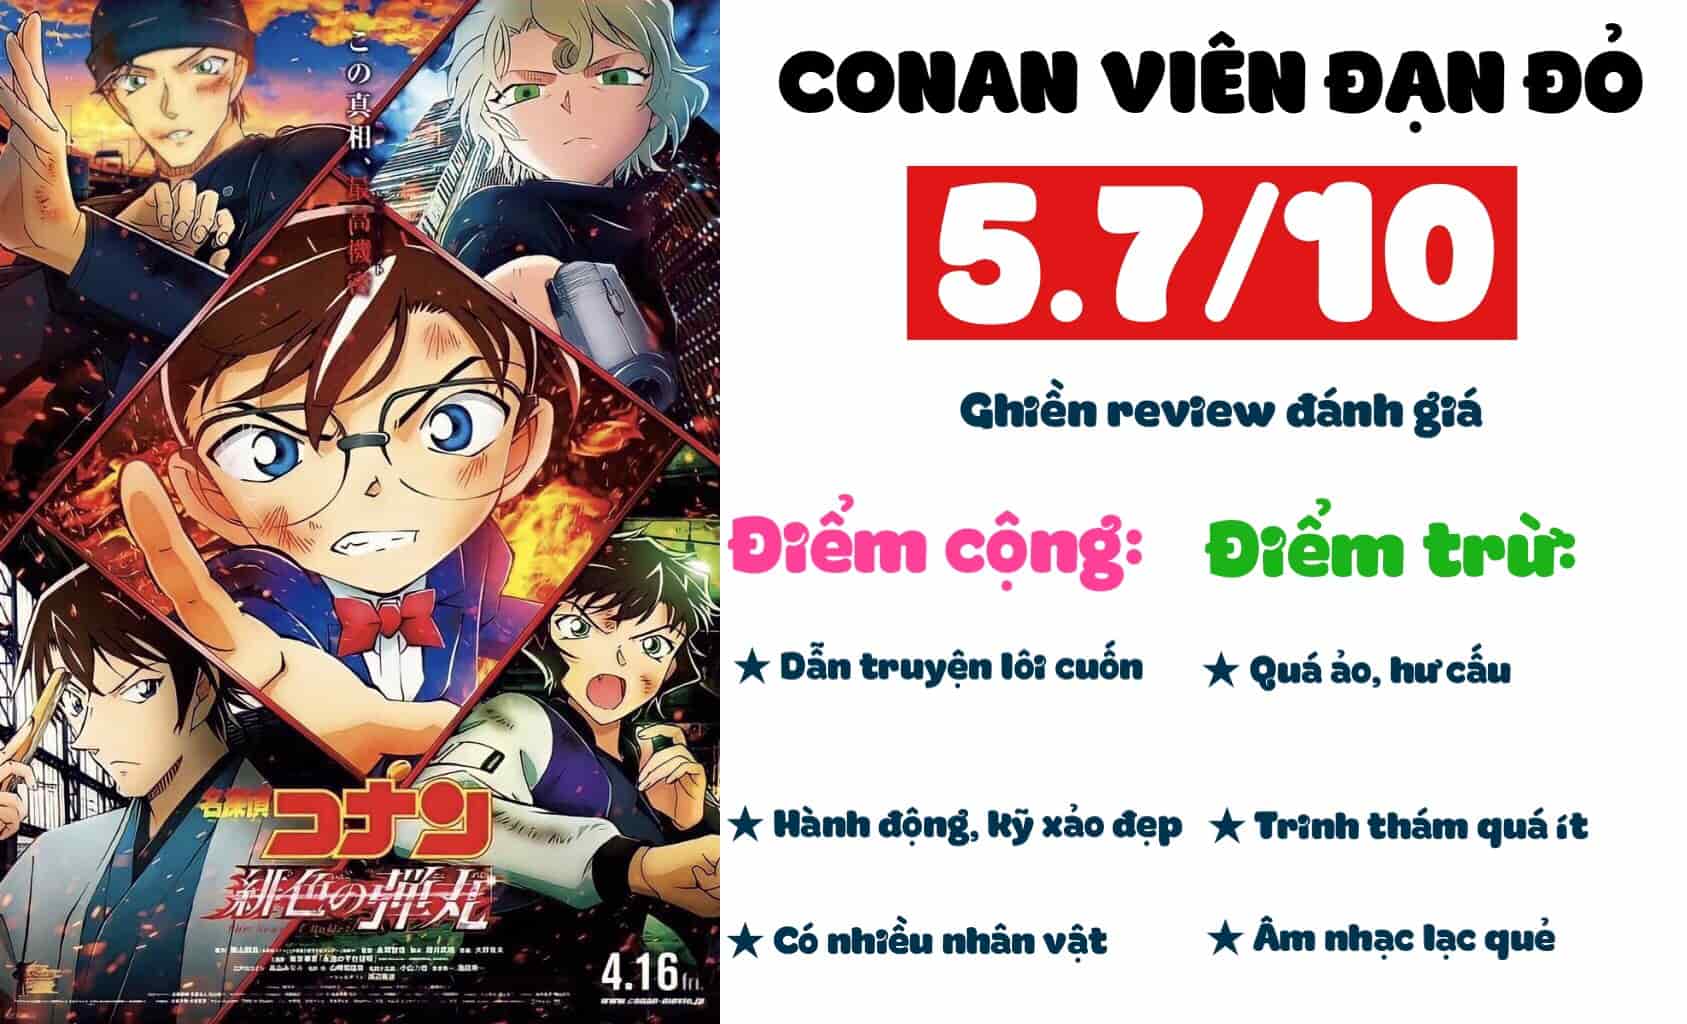 Ghien review - Tham tu lung danh Conan - Vien dan do